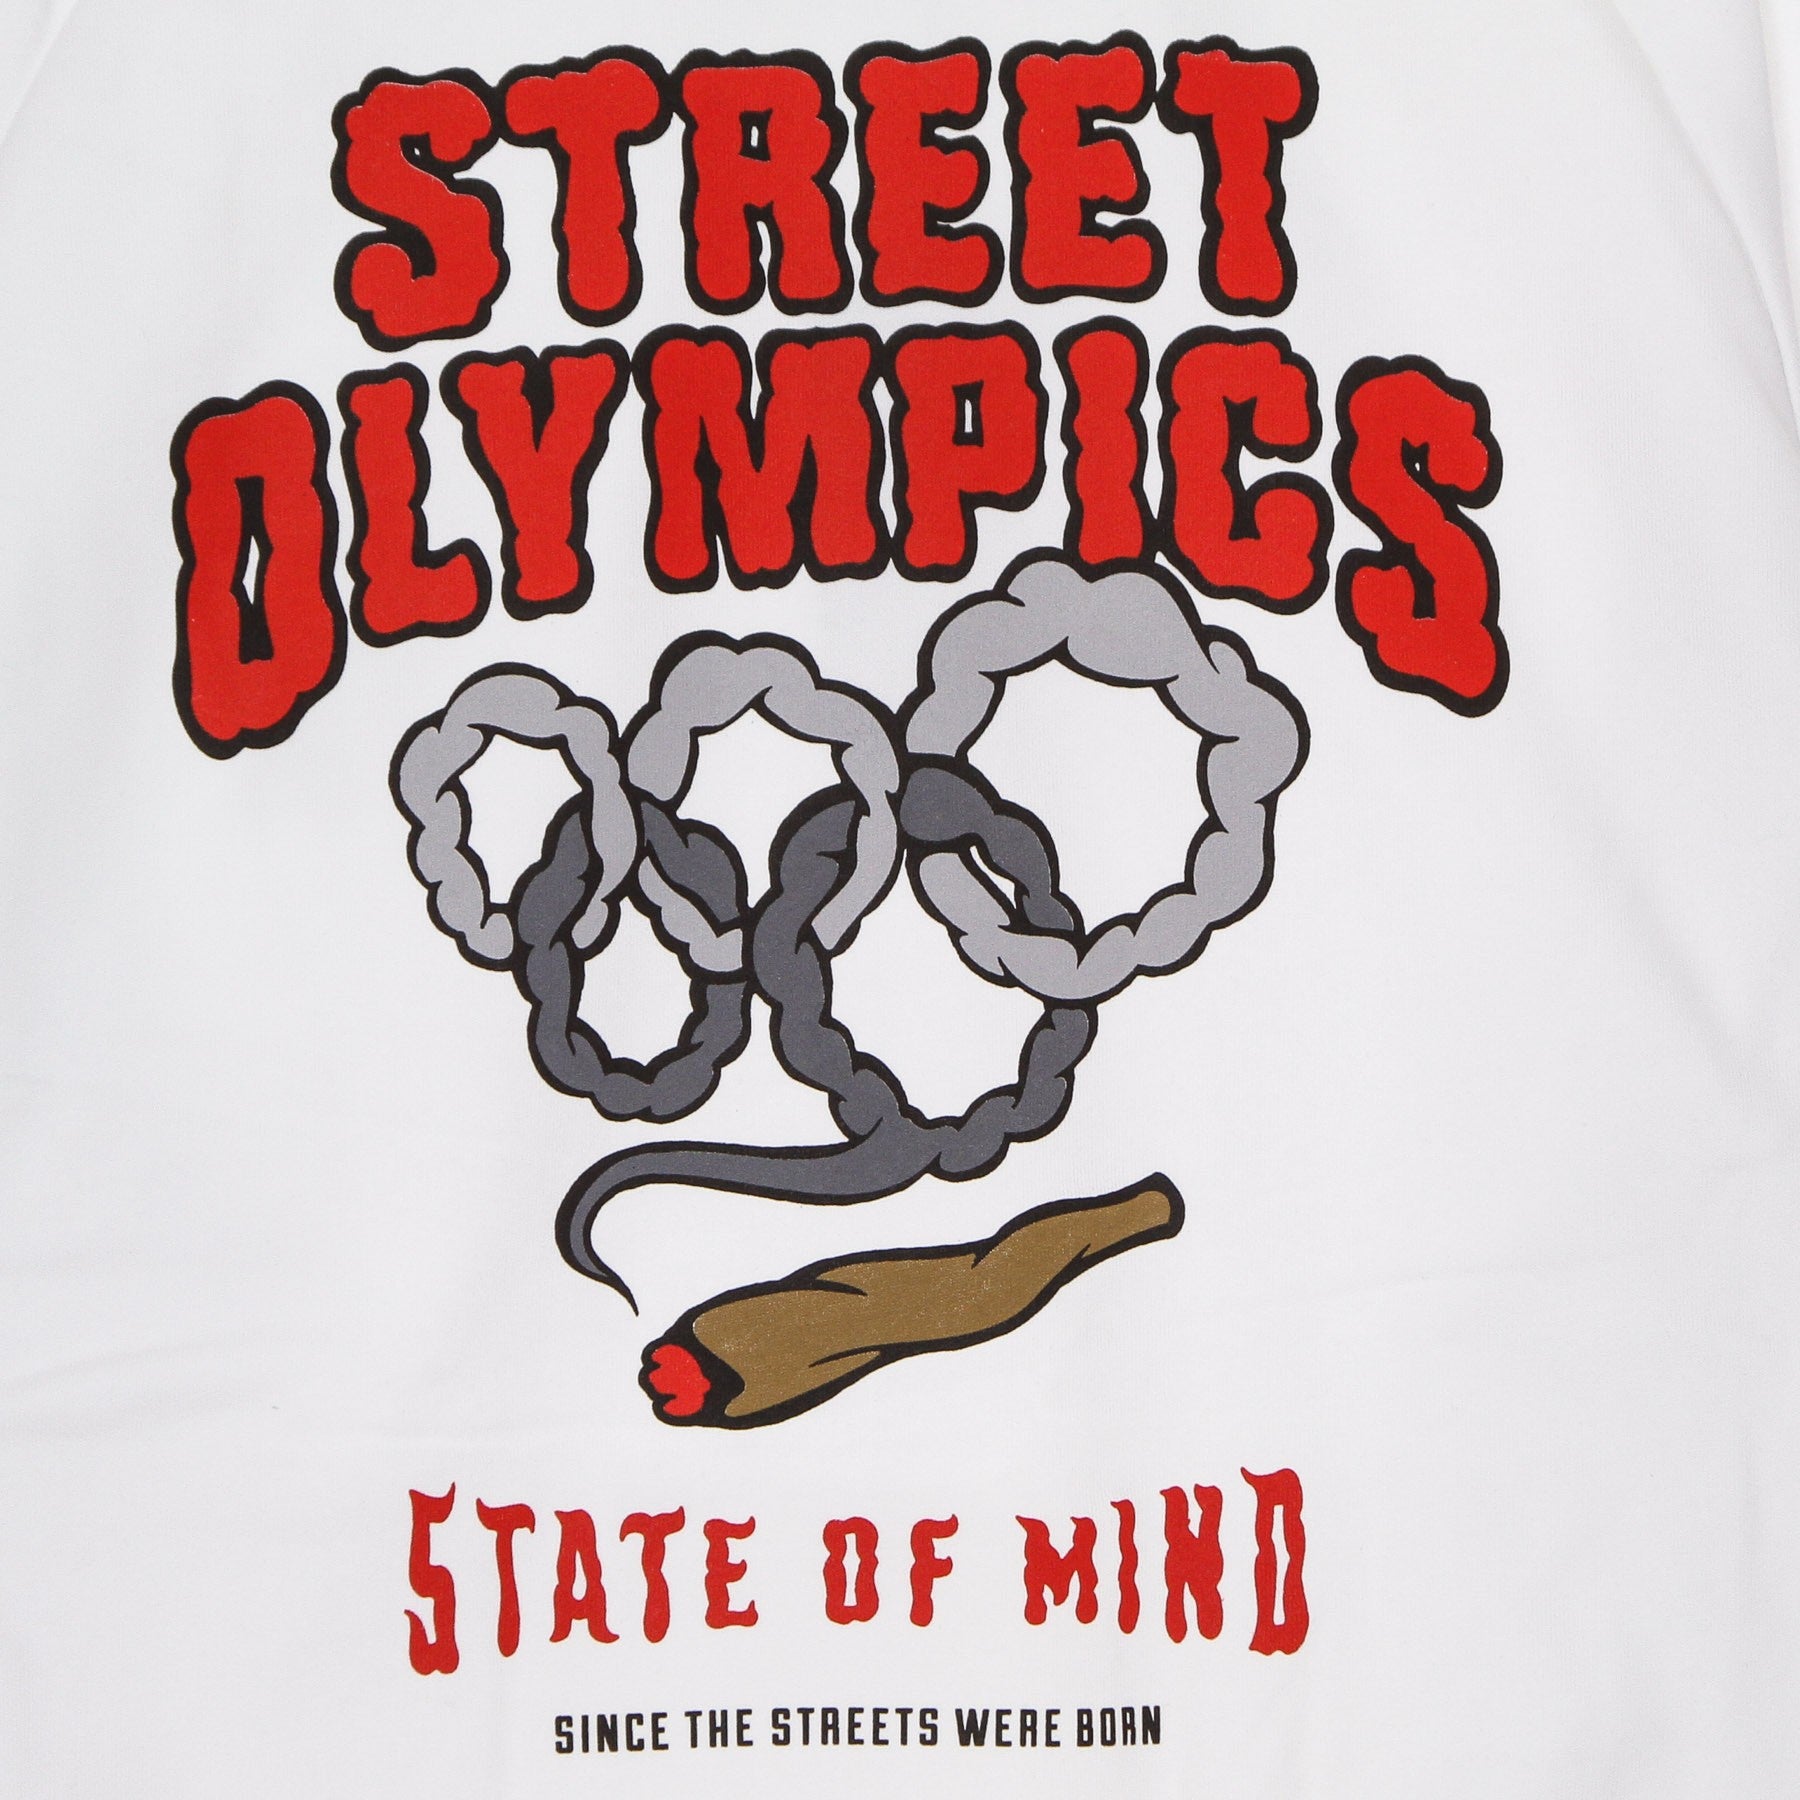 Men's Street Olympics Crewneck Sweatshirt